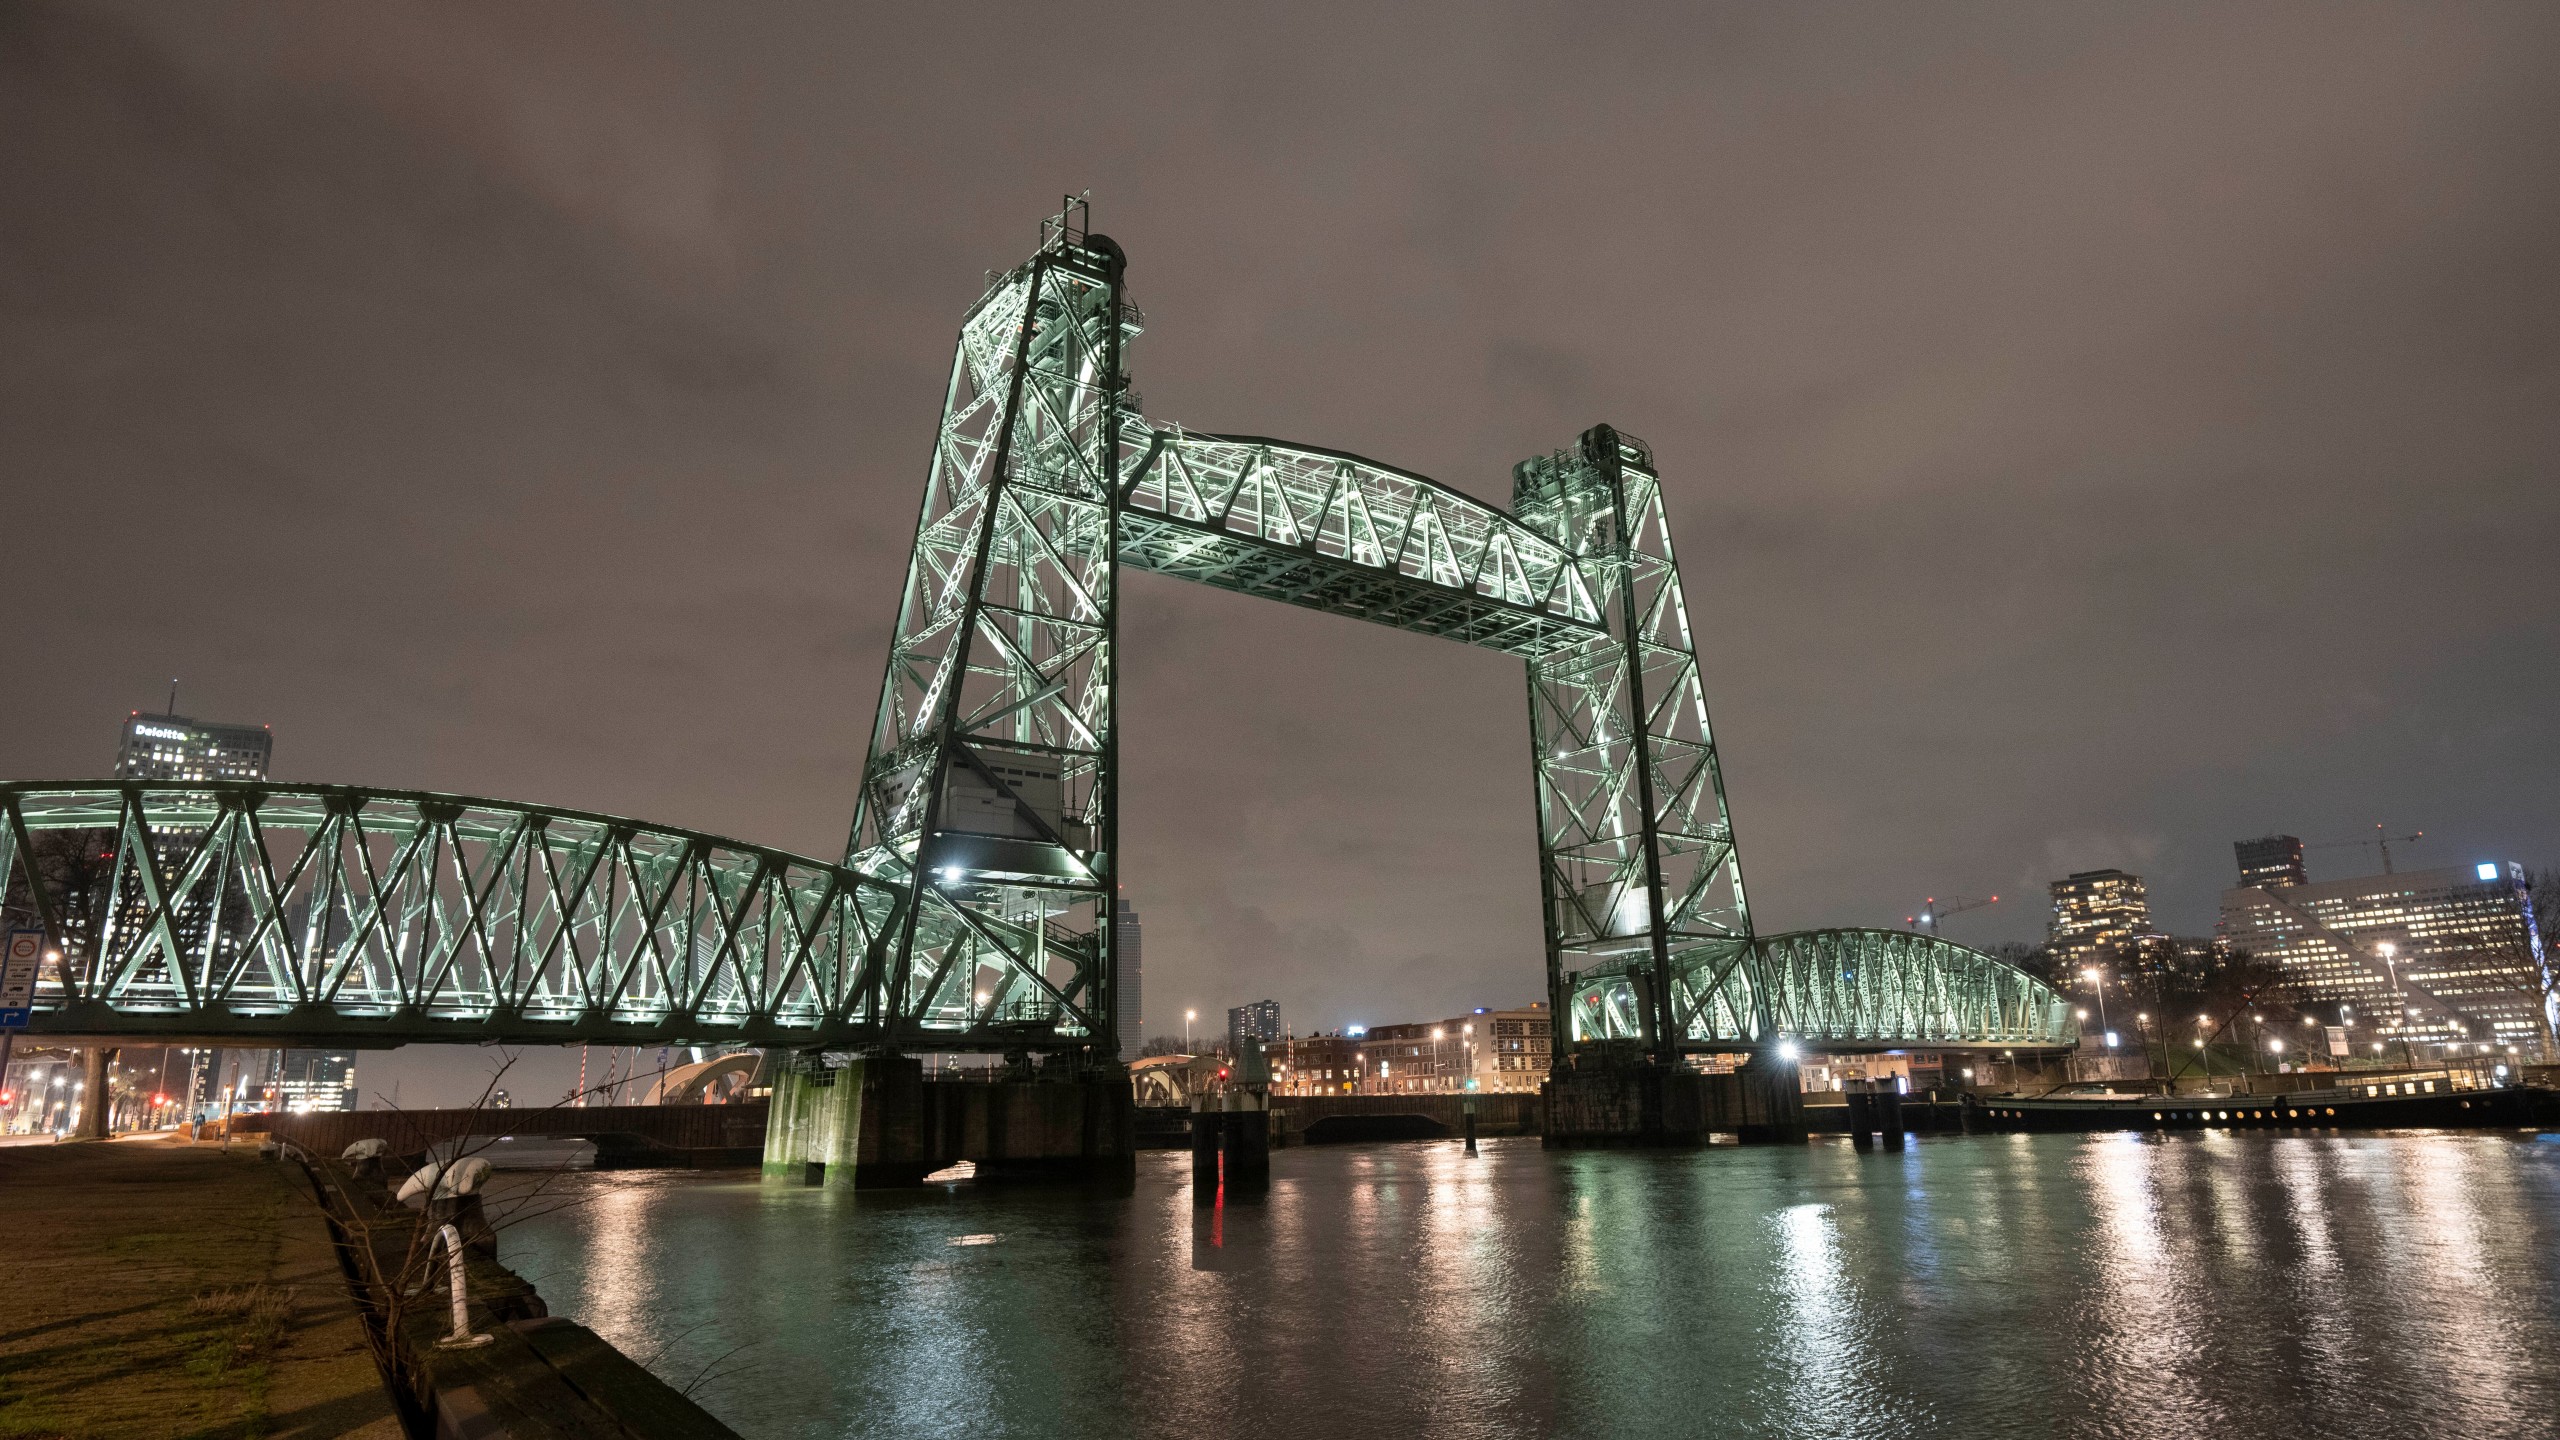 Rotterdam, Netherlands: Koningshaven Bridge, nicknamed De Hef, (The Lift)